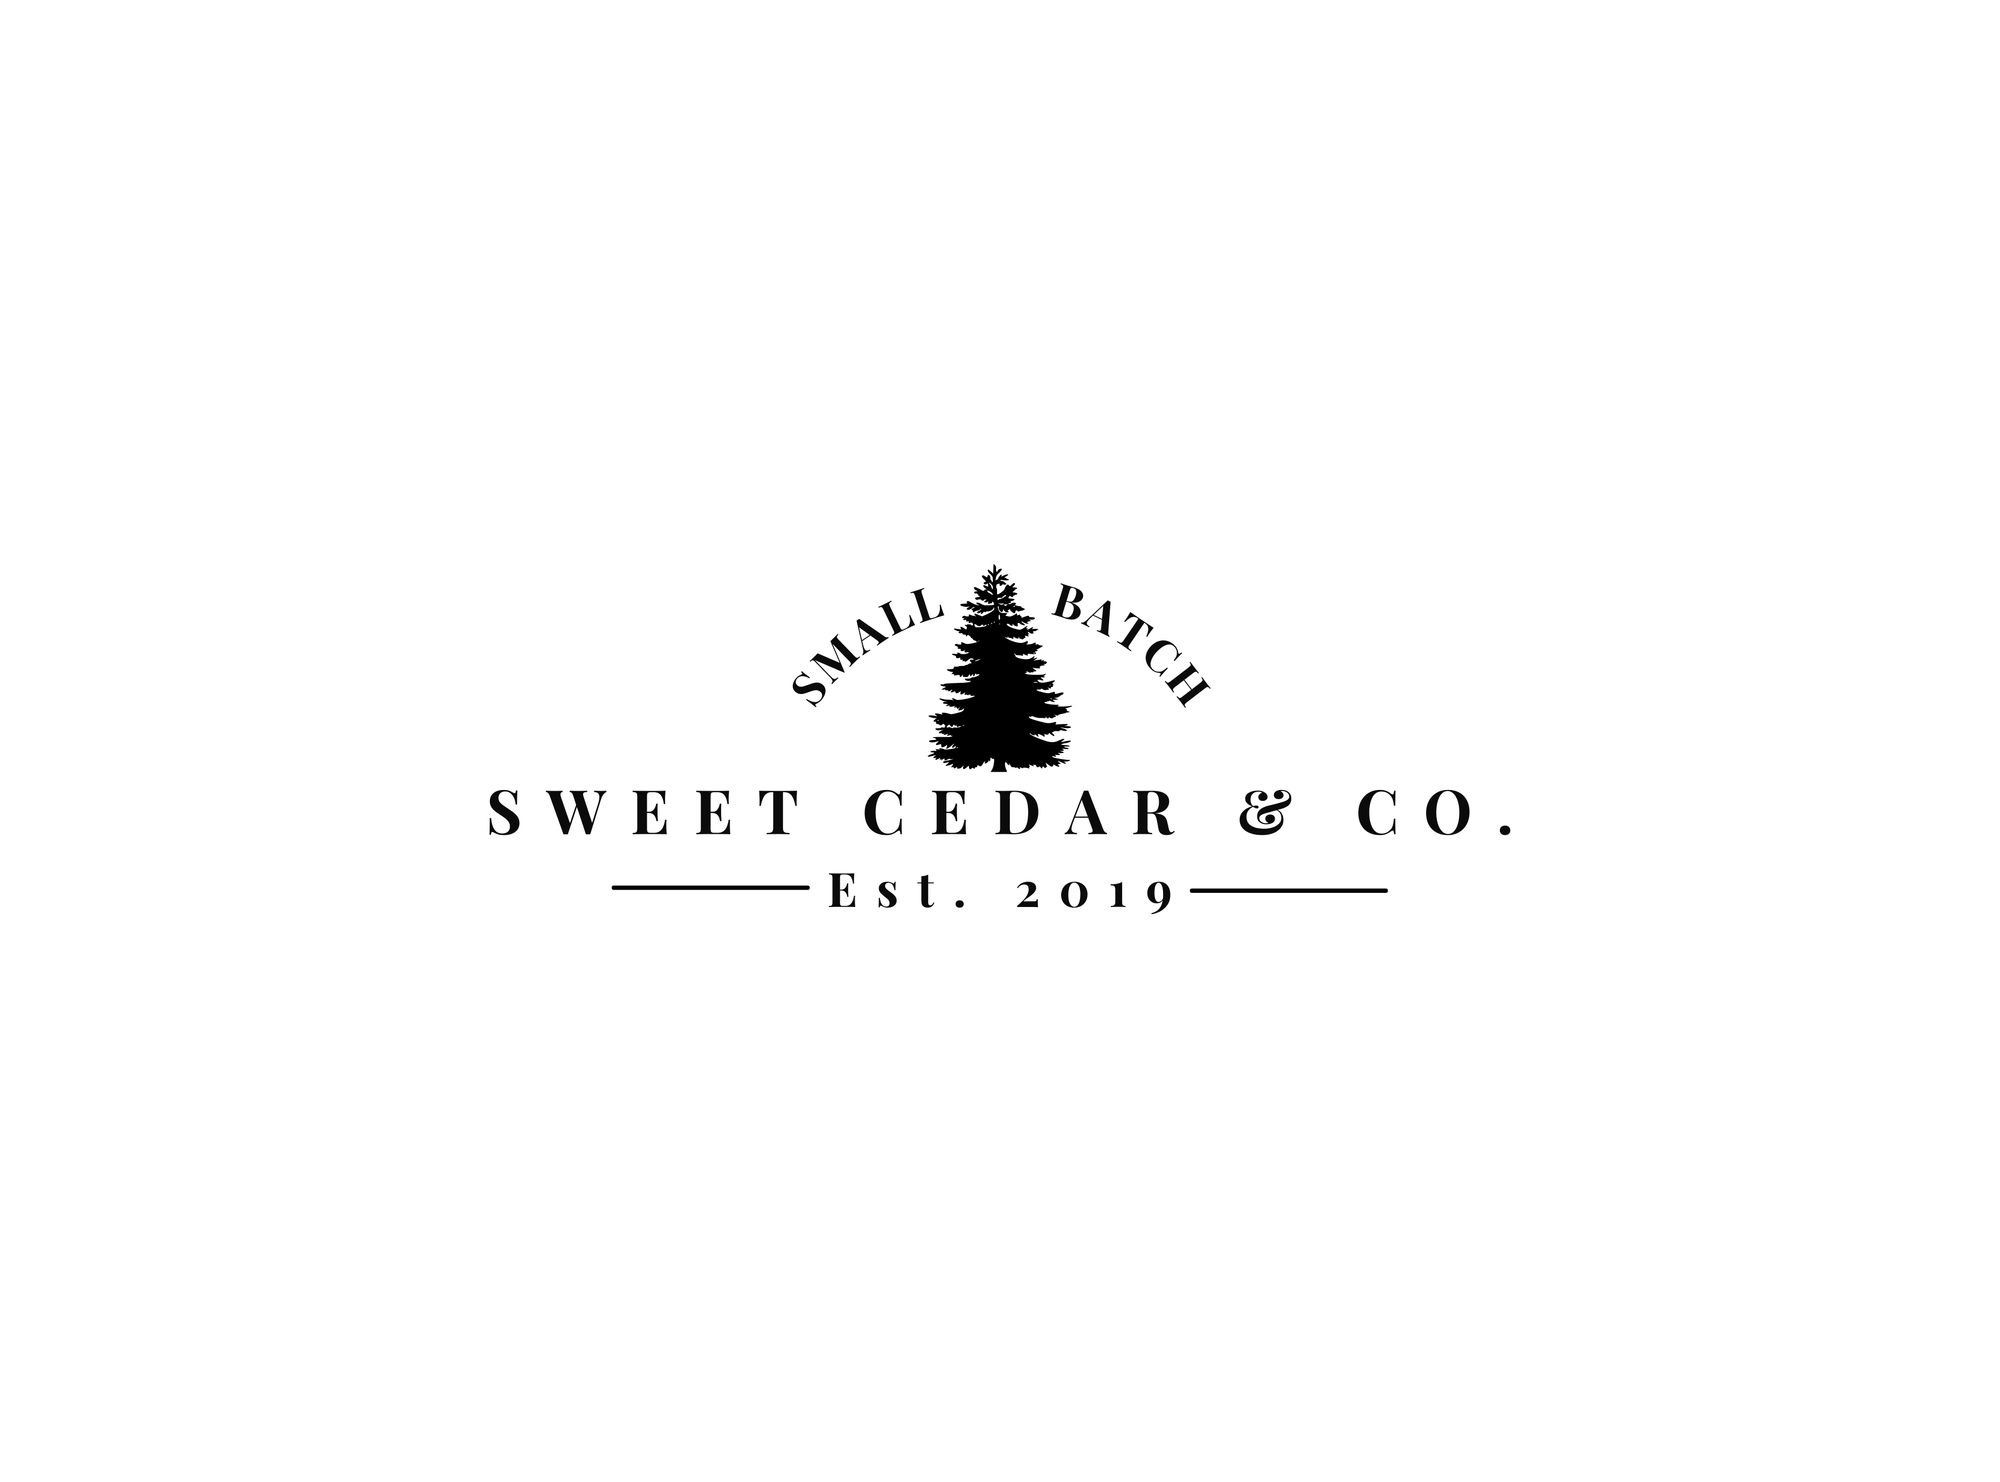 Small Batch, Fresh, Natural - Sweet Cedar & Co.